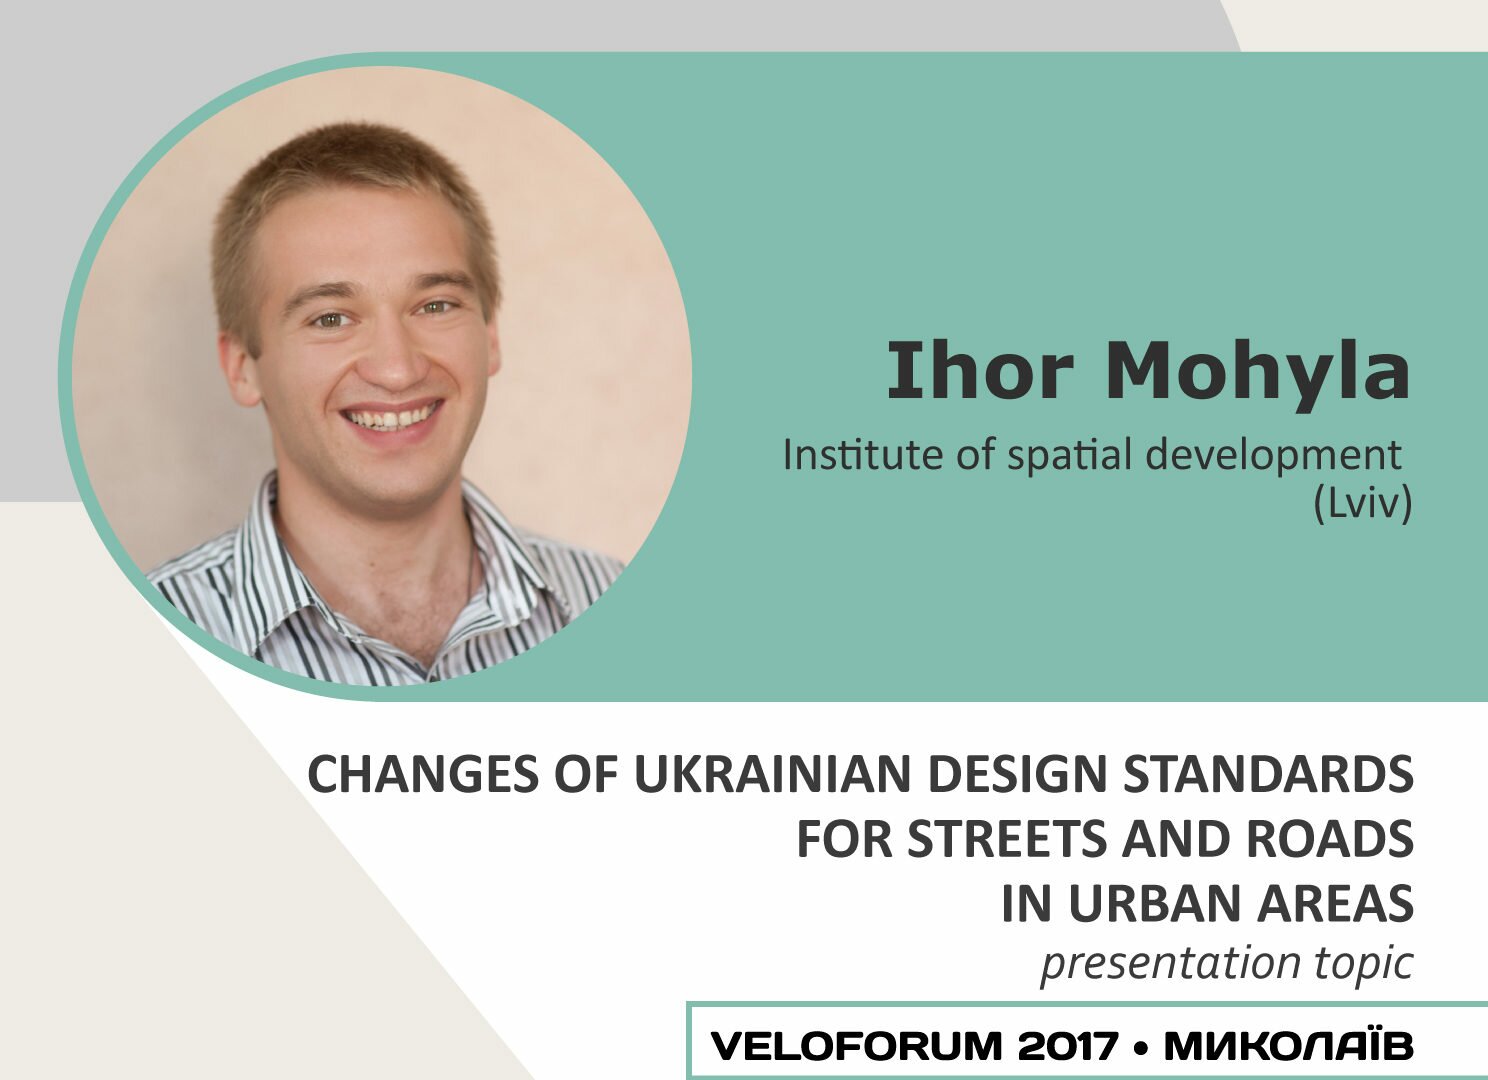 Veloforum 2017 speakers. Ihor Mohyla